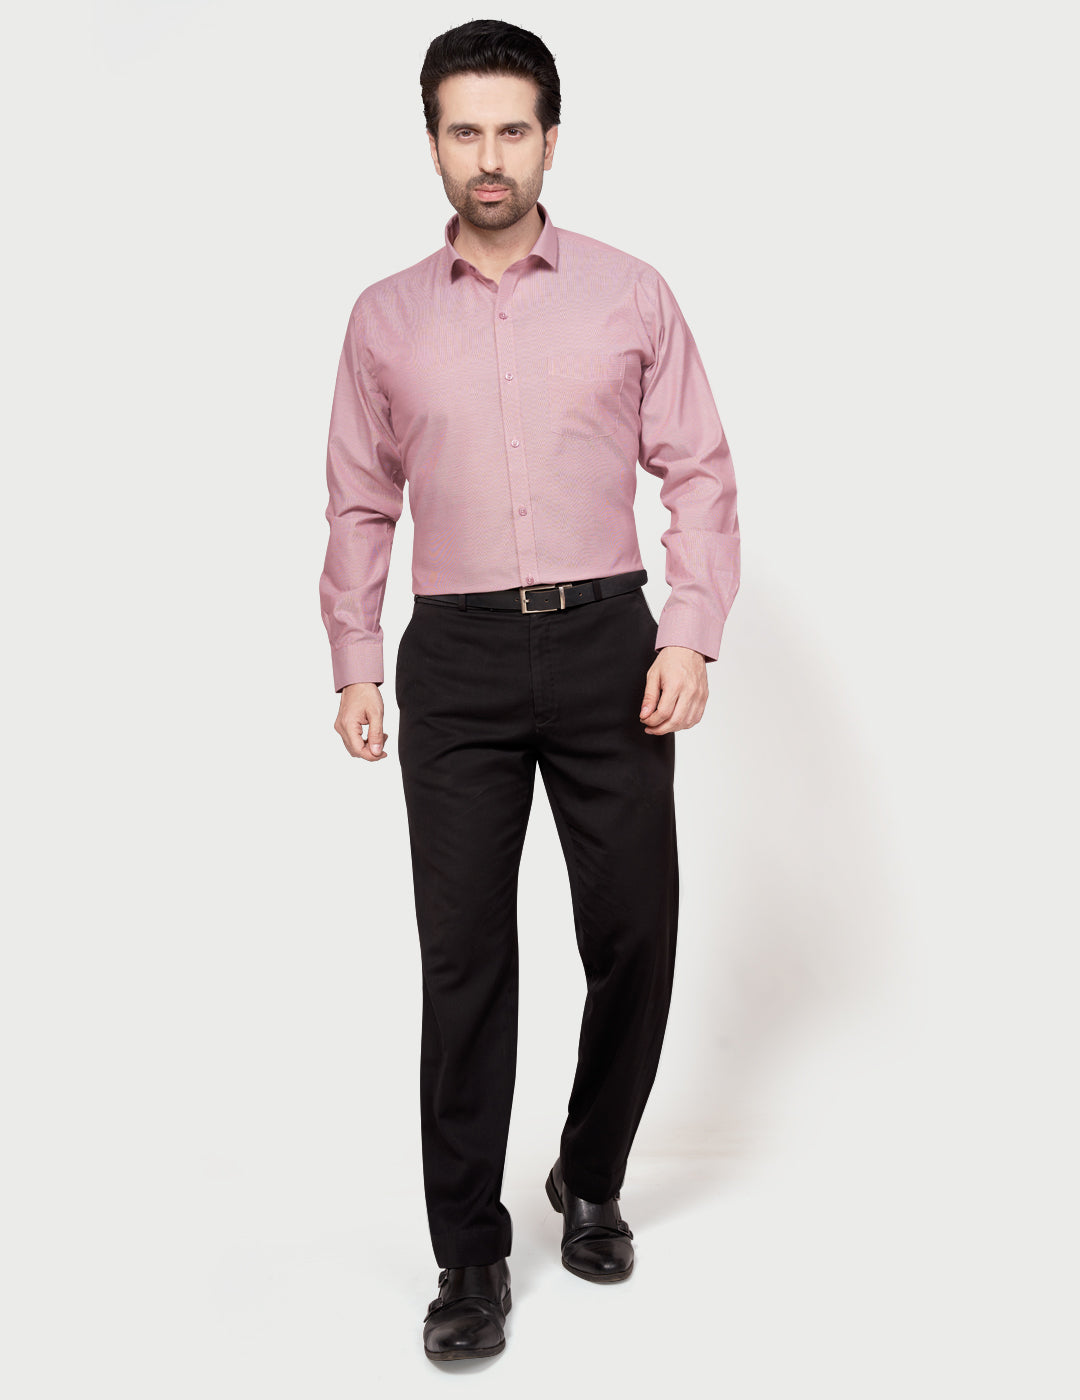 Black & White Men's Formal Shirt Dark Pink